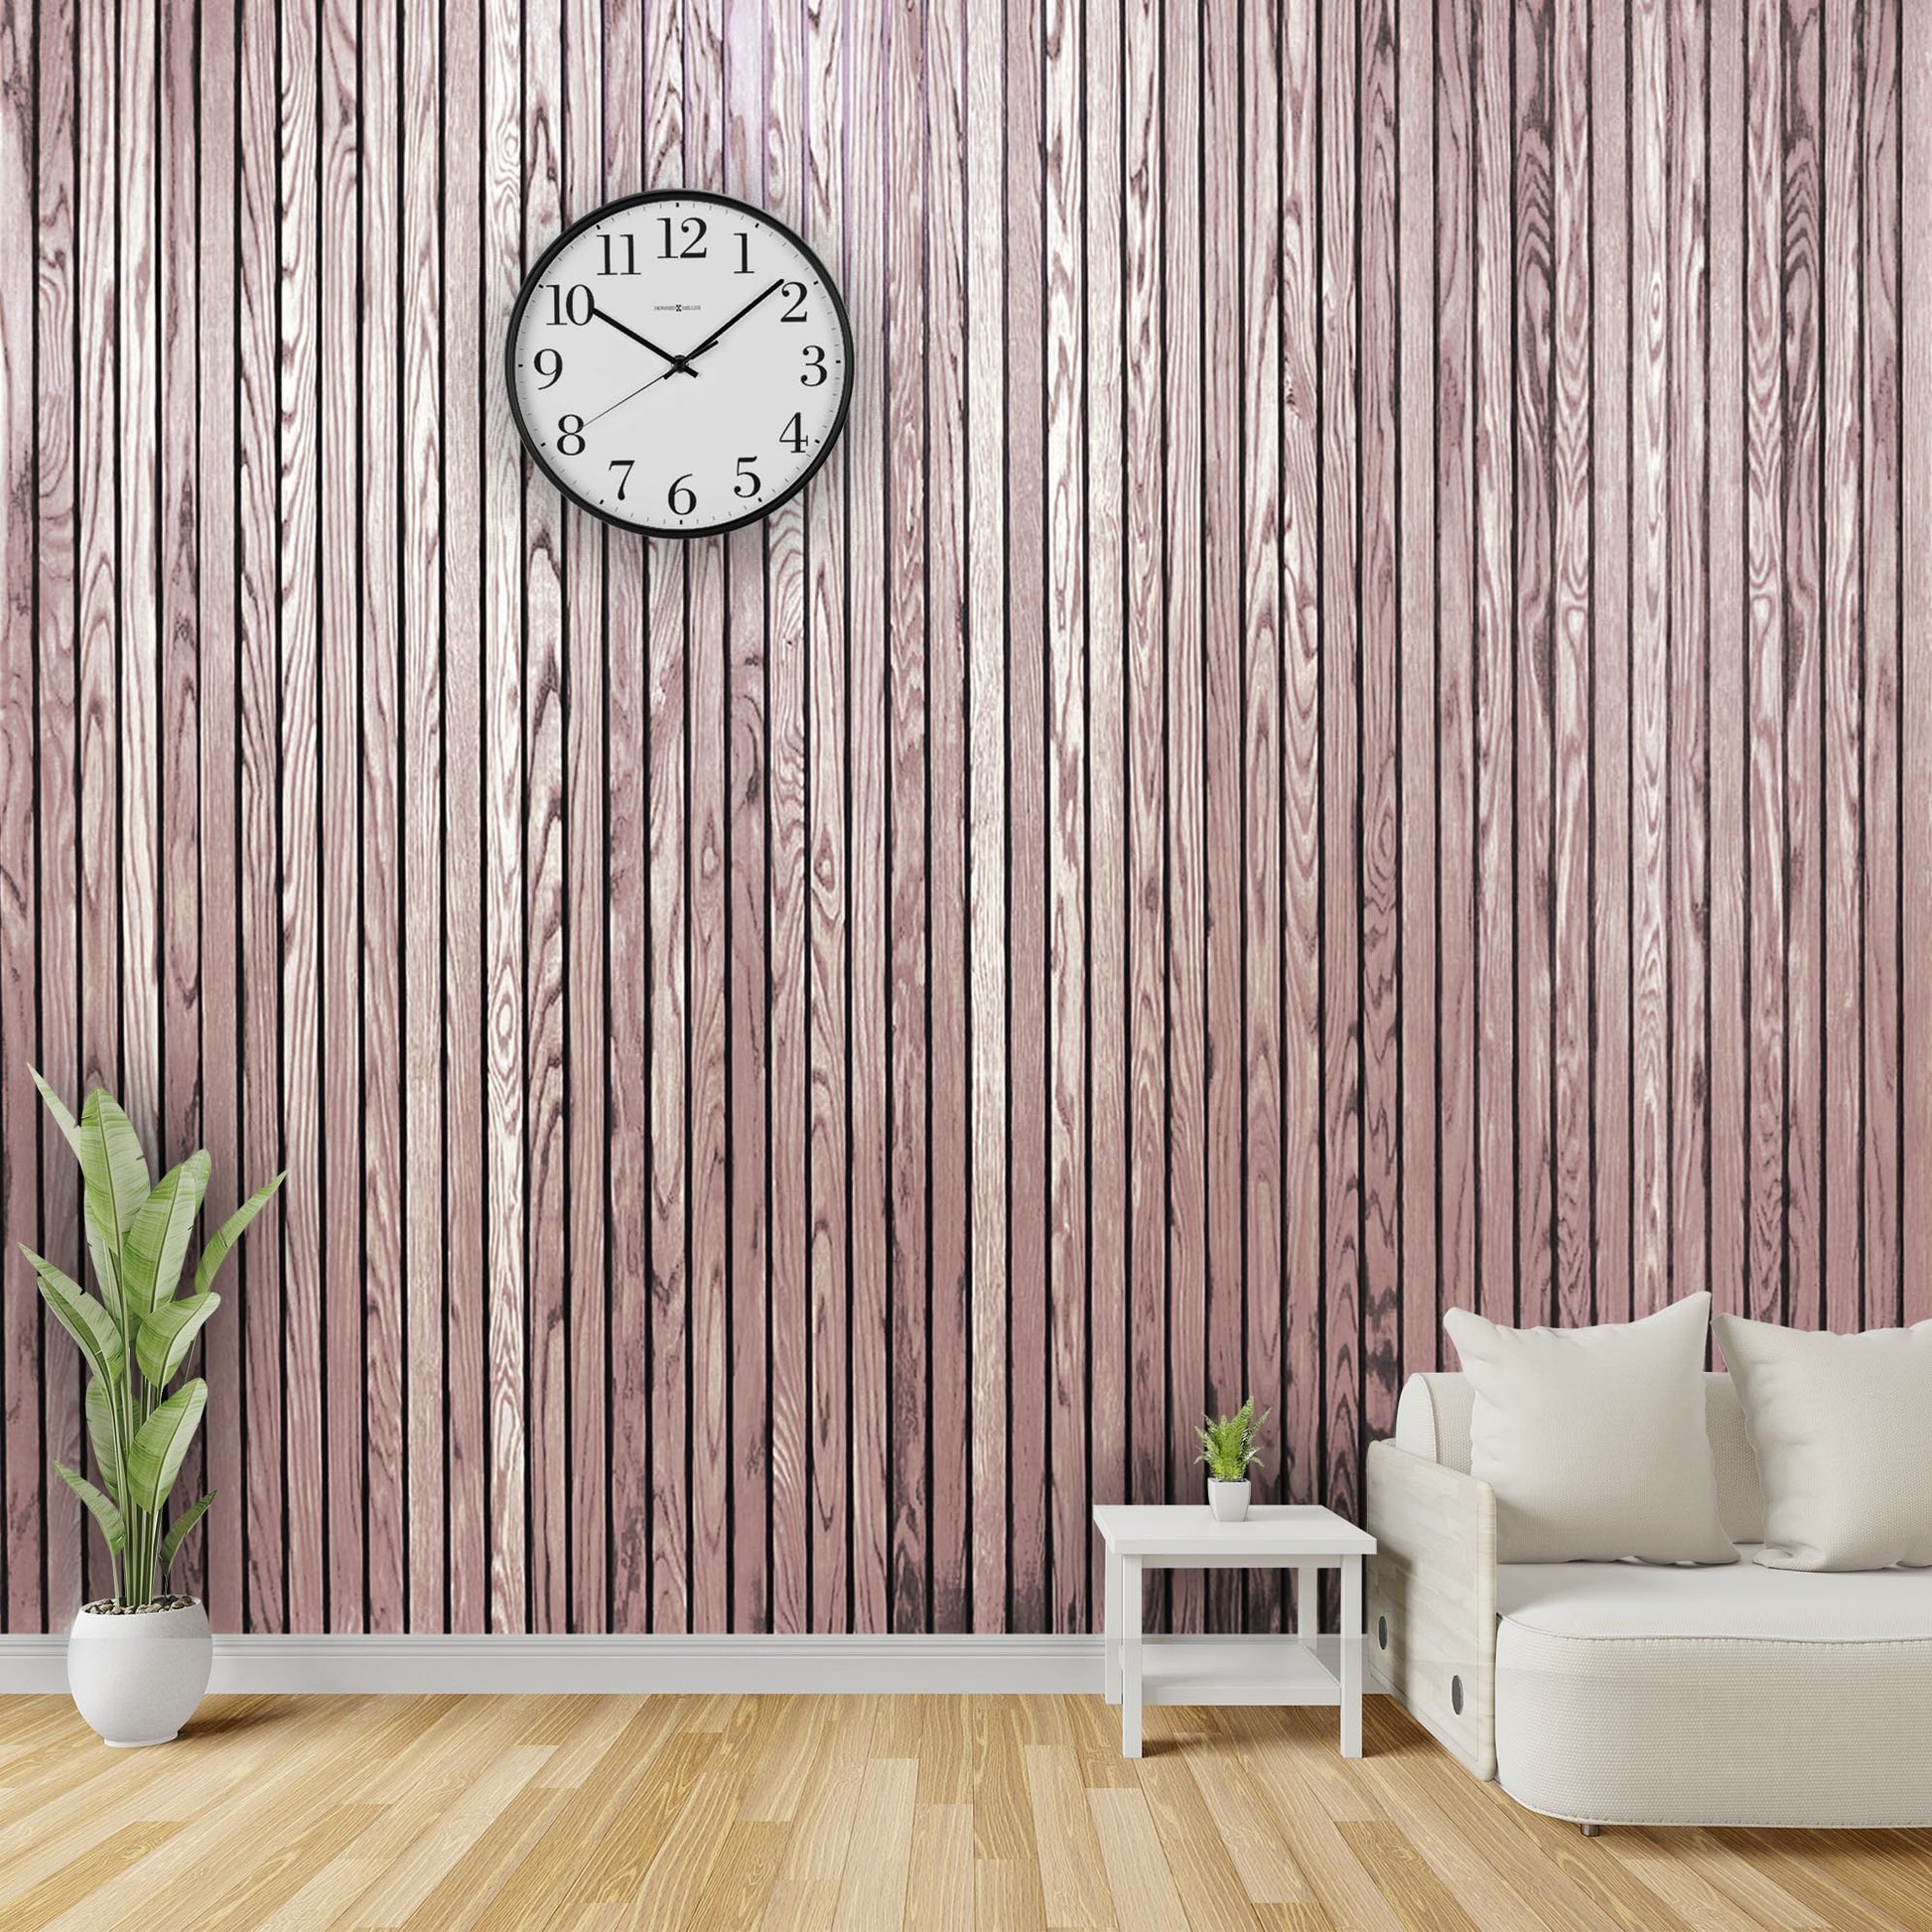 Wood Slat Wall, 3D Wood Slat Wall,Verticsl slats, slats, slat wall 3D Slats panel, 3d wall decor, wood slat, wood slat panels,3D Wide Slat Wall Panels , Wooden Wood Slat Wall, room divider, wall art, panel, art deco, Acoustic Panel, wall decoration